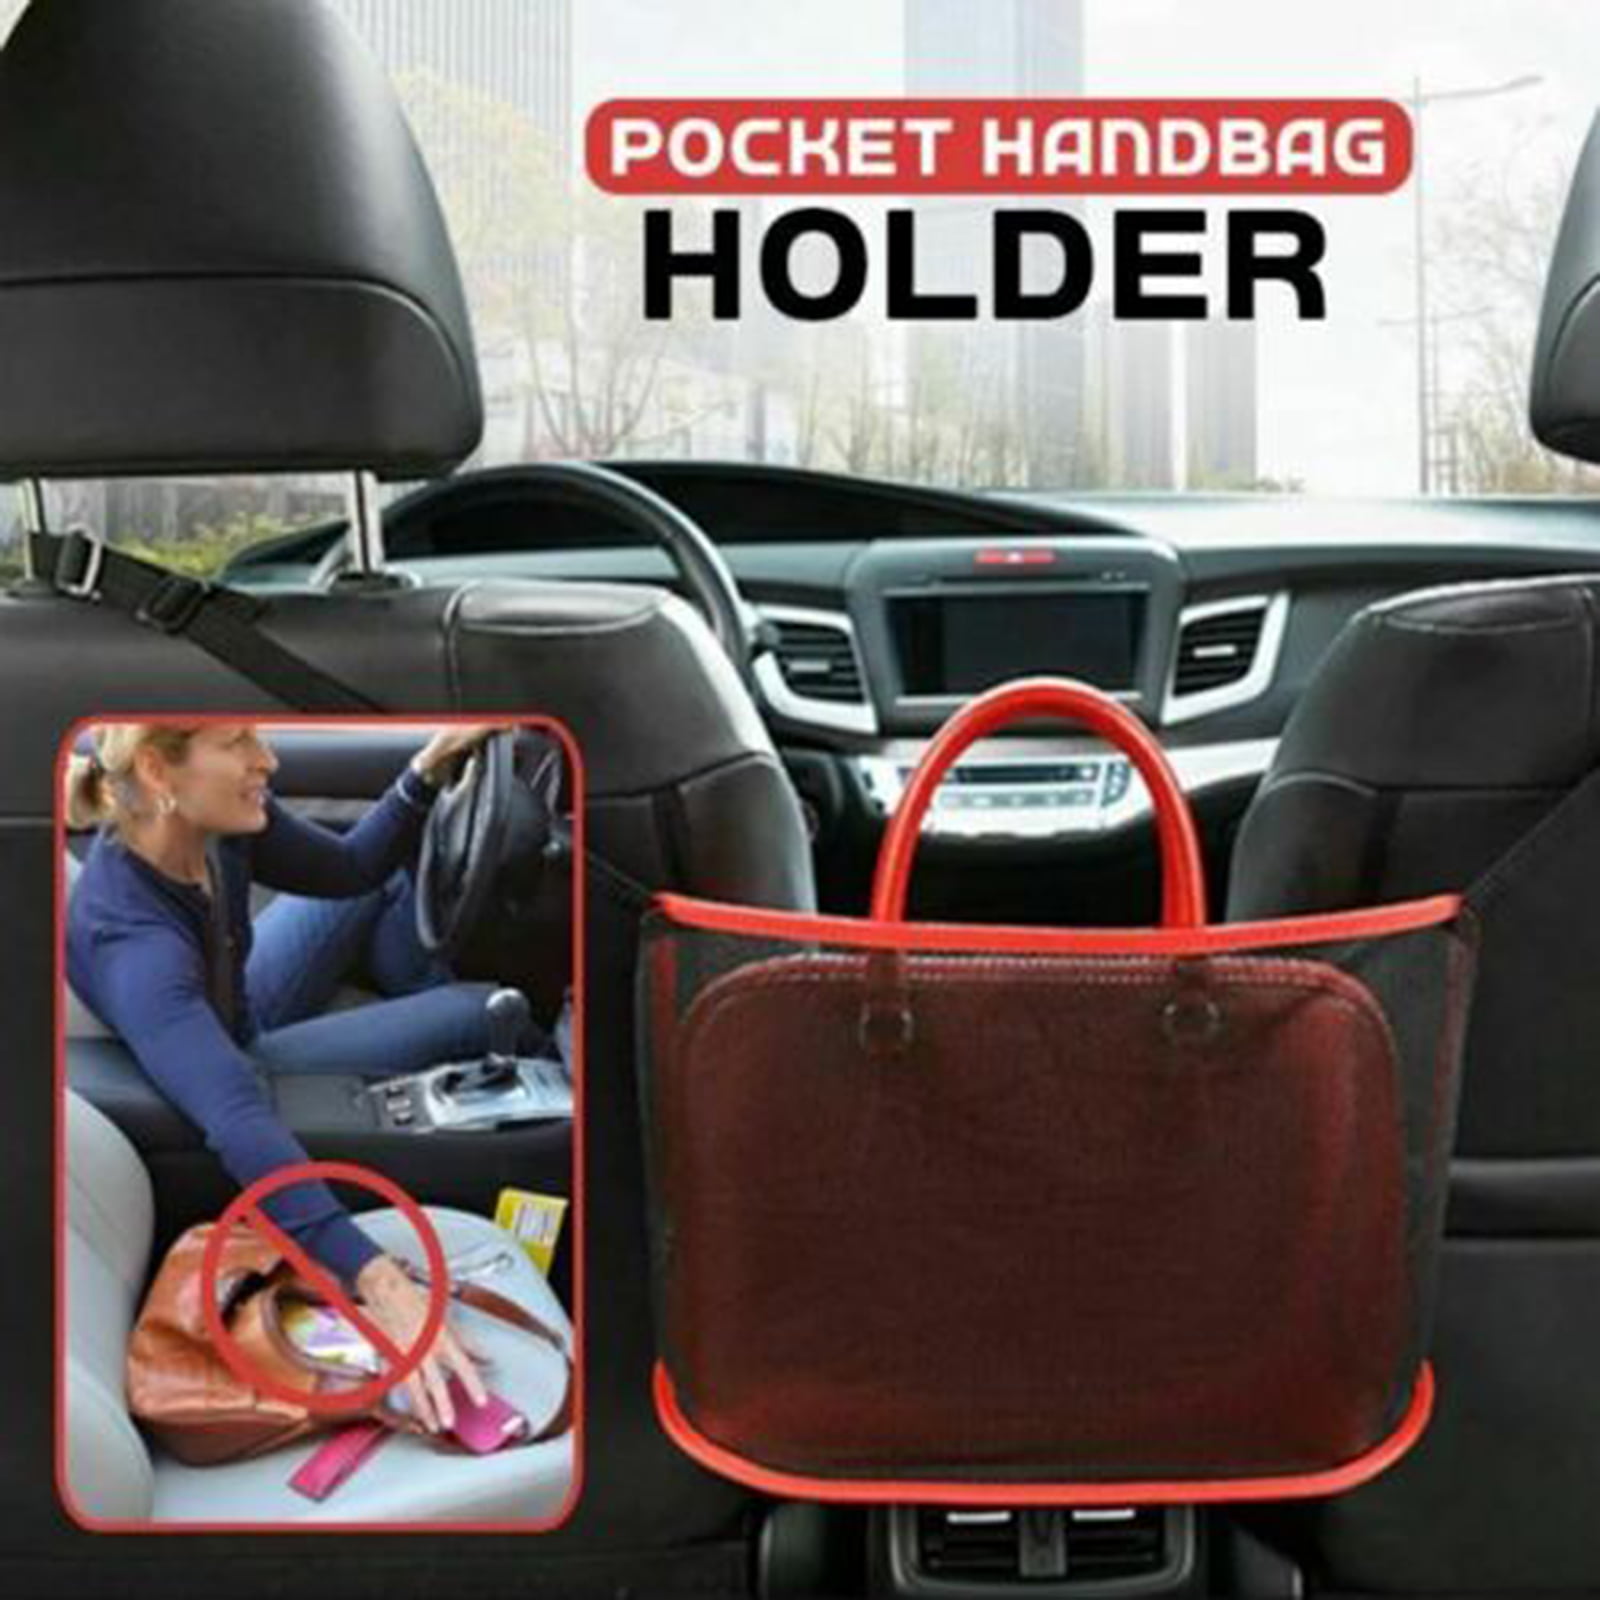 Advanced Car Seat Side Storage Mesh Net Bag Net Pocket Handbag Holder Organizer